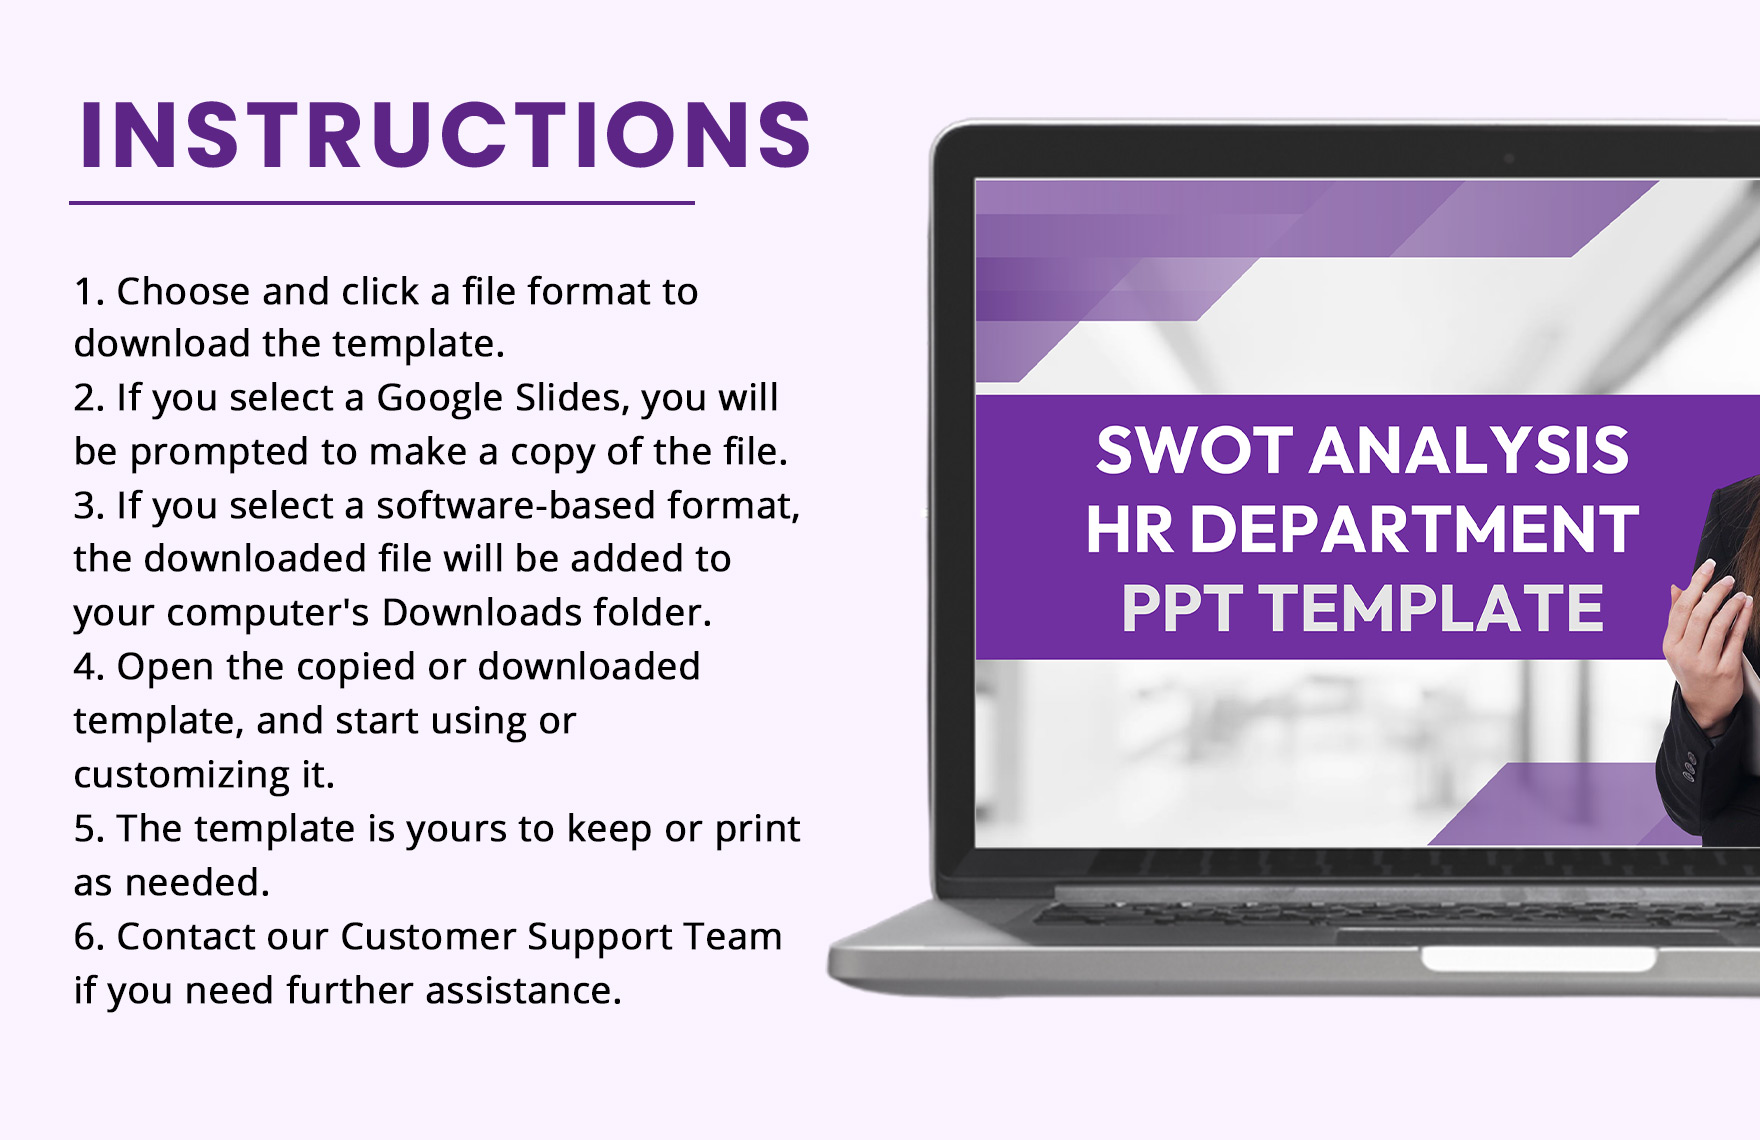 SWOT Analysis HR Department Template